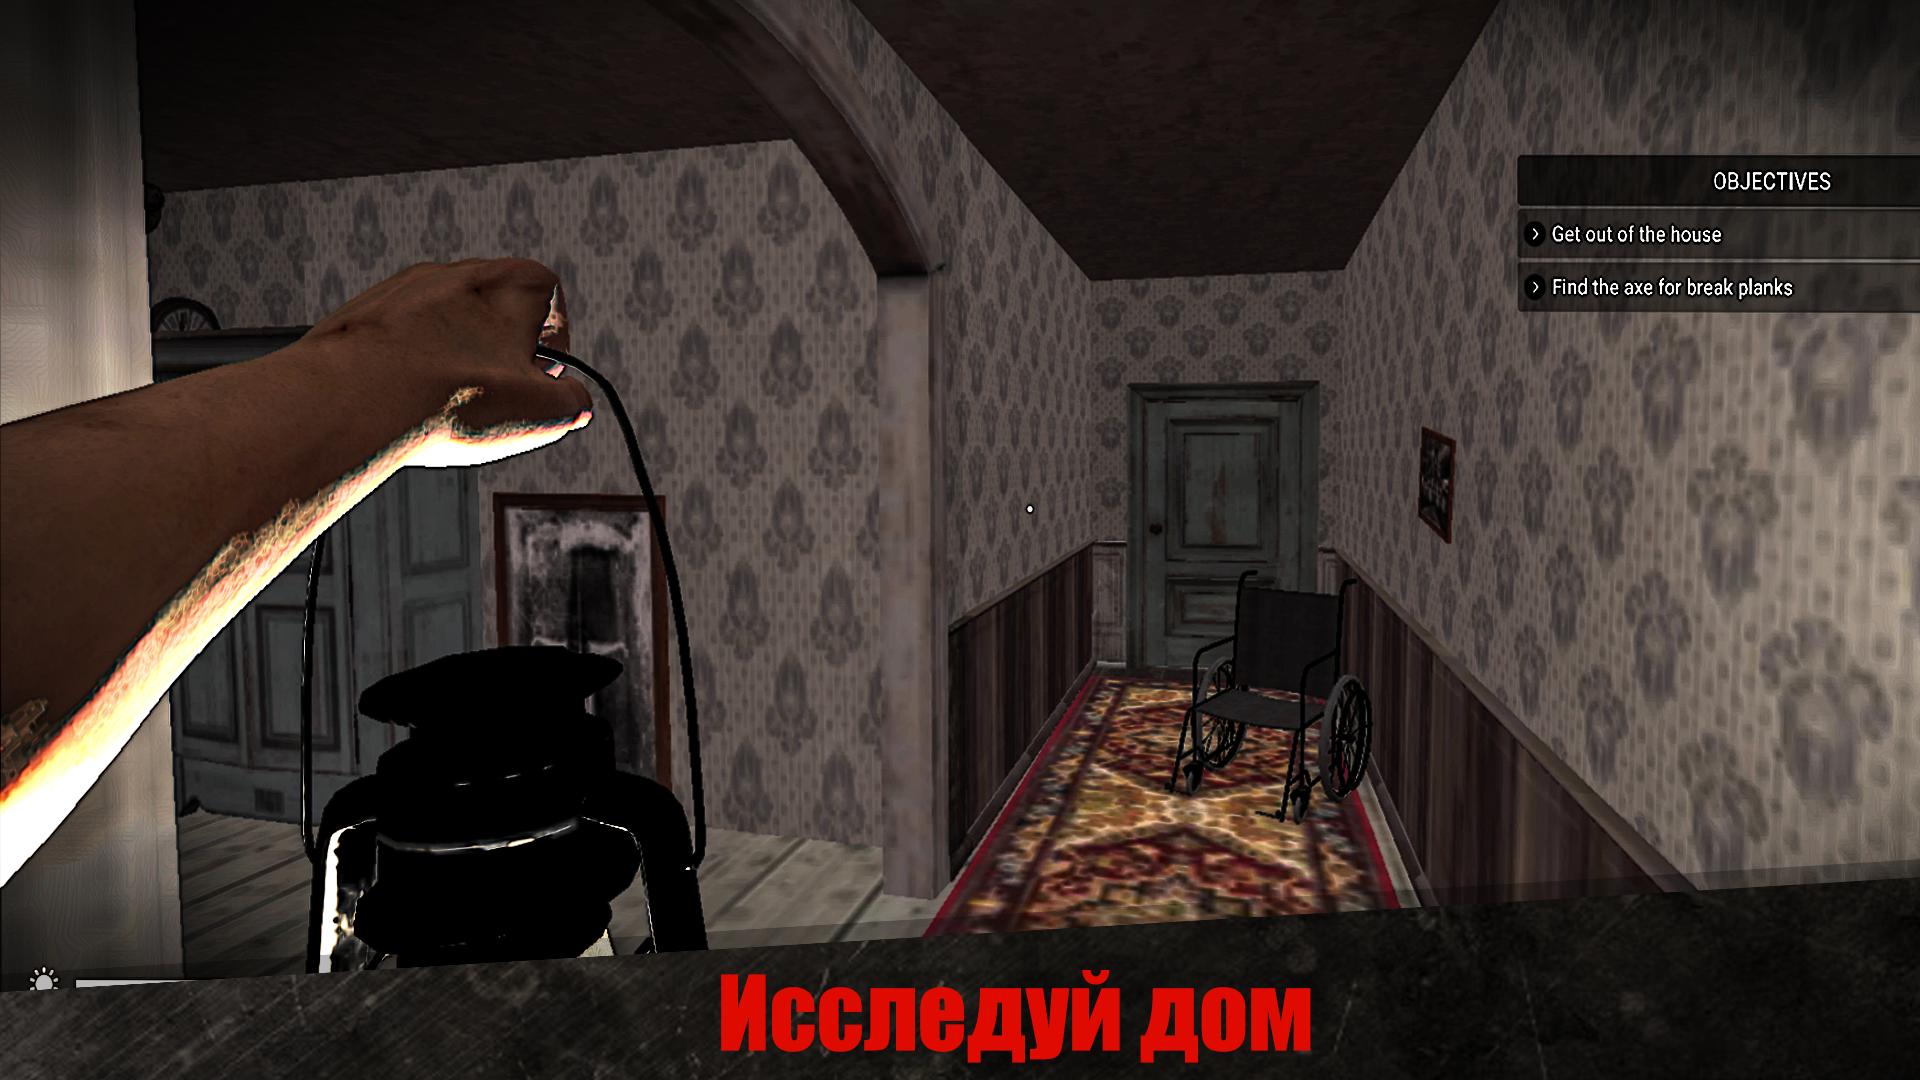 Granny 2021: Scary Granny Survival Horror Game 0.5 Screenshot 12